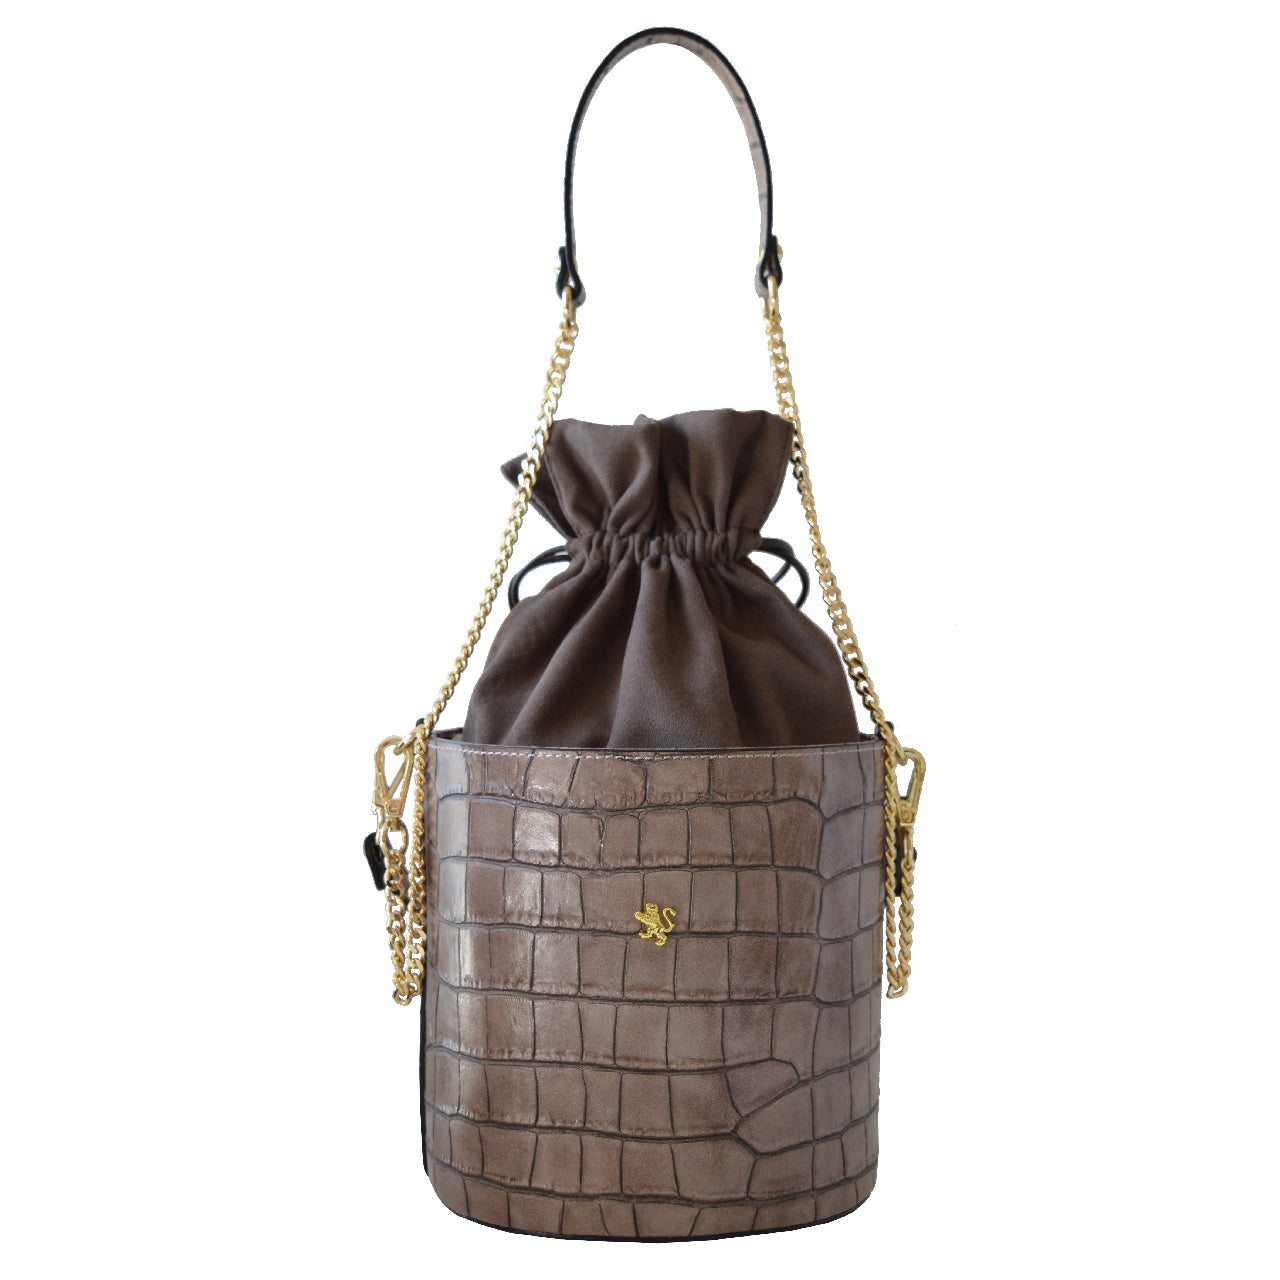 Pratesi Secchiello Lady bag K335 in genuine Italian leather - Croco Embossed Leather Cognac